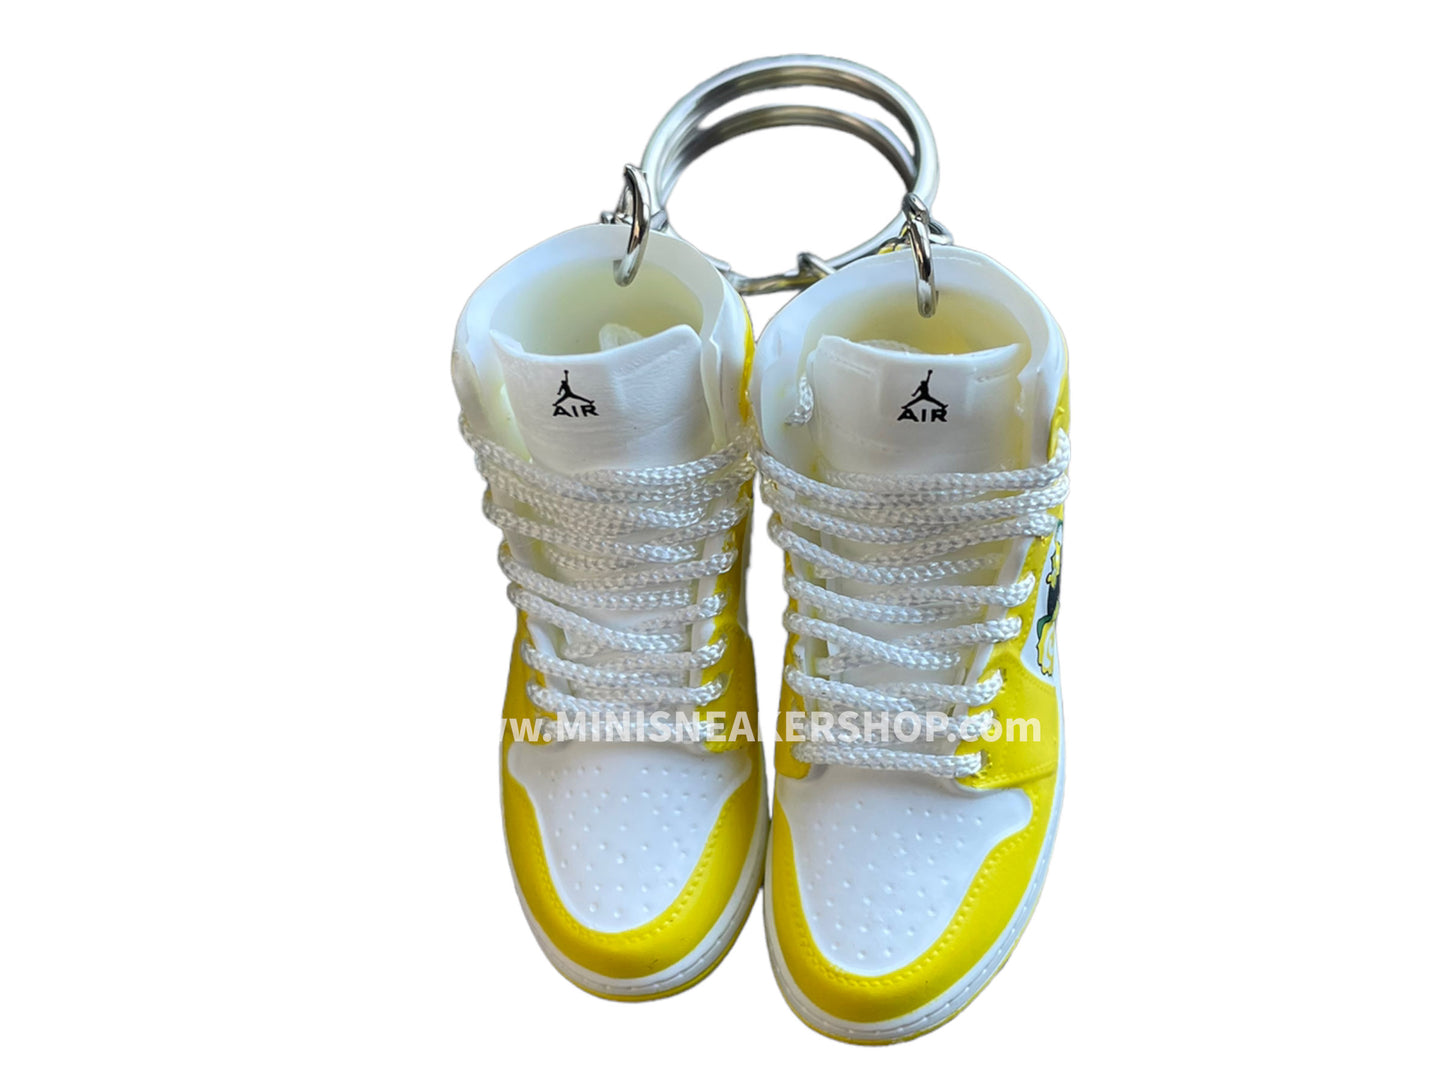 Mini sneaker keychain 3D  Air Jordan 1 - Dynamic Yellow